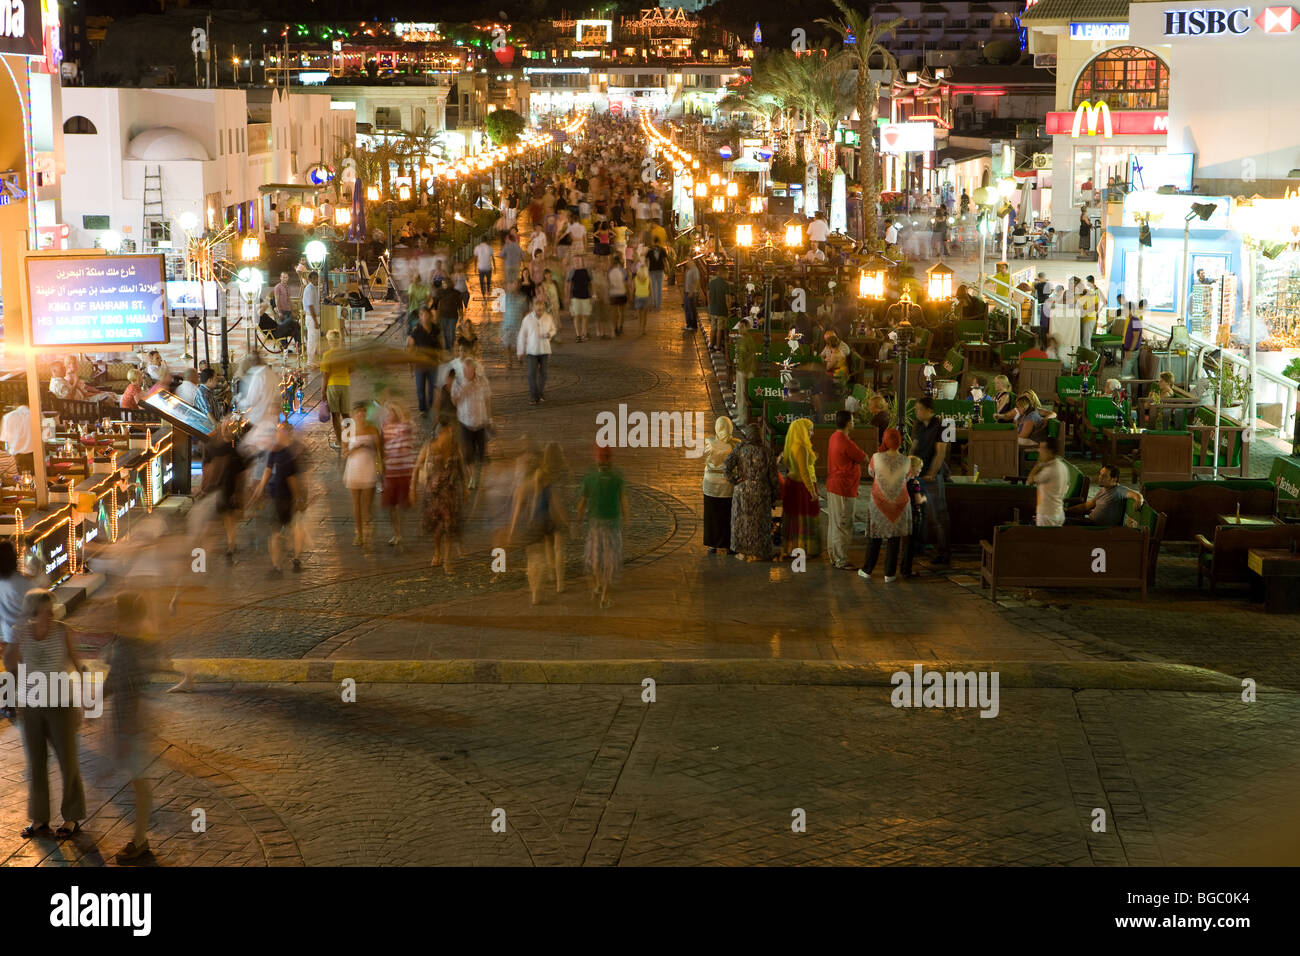 Africa, Egypt, Sharm el Sheik, Nightlife, bar, souvenir, market, tourist route, bazar shop, crowd Stock Photo